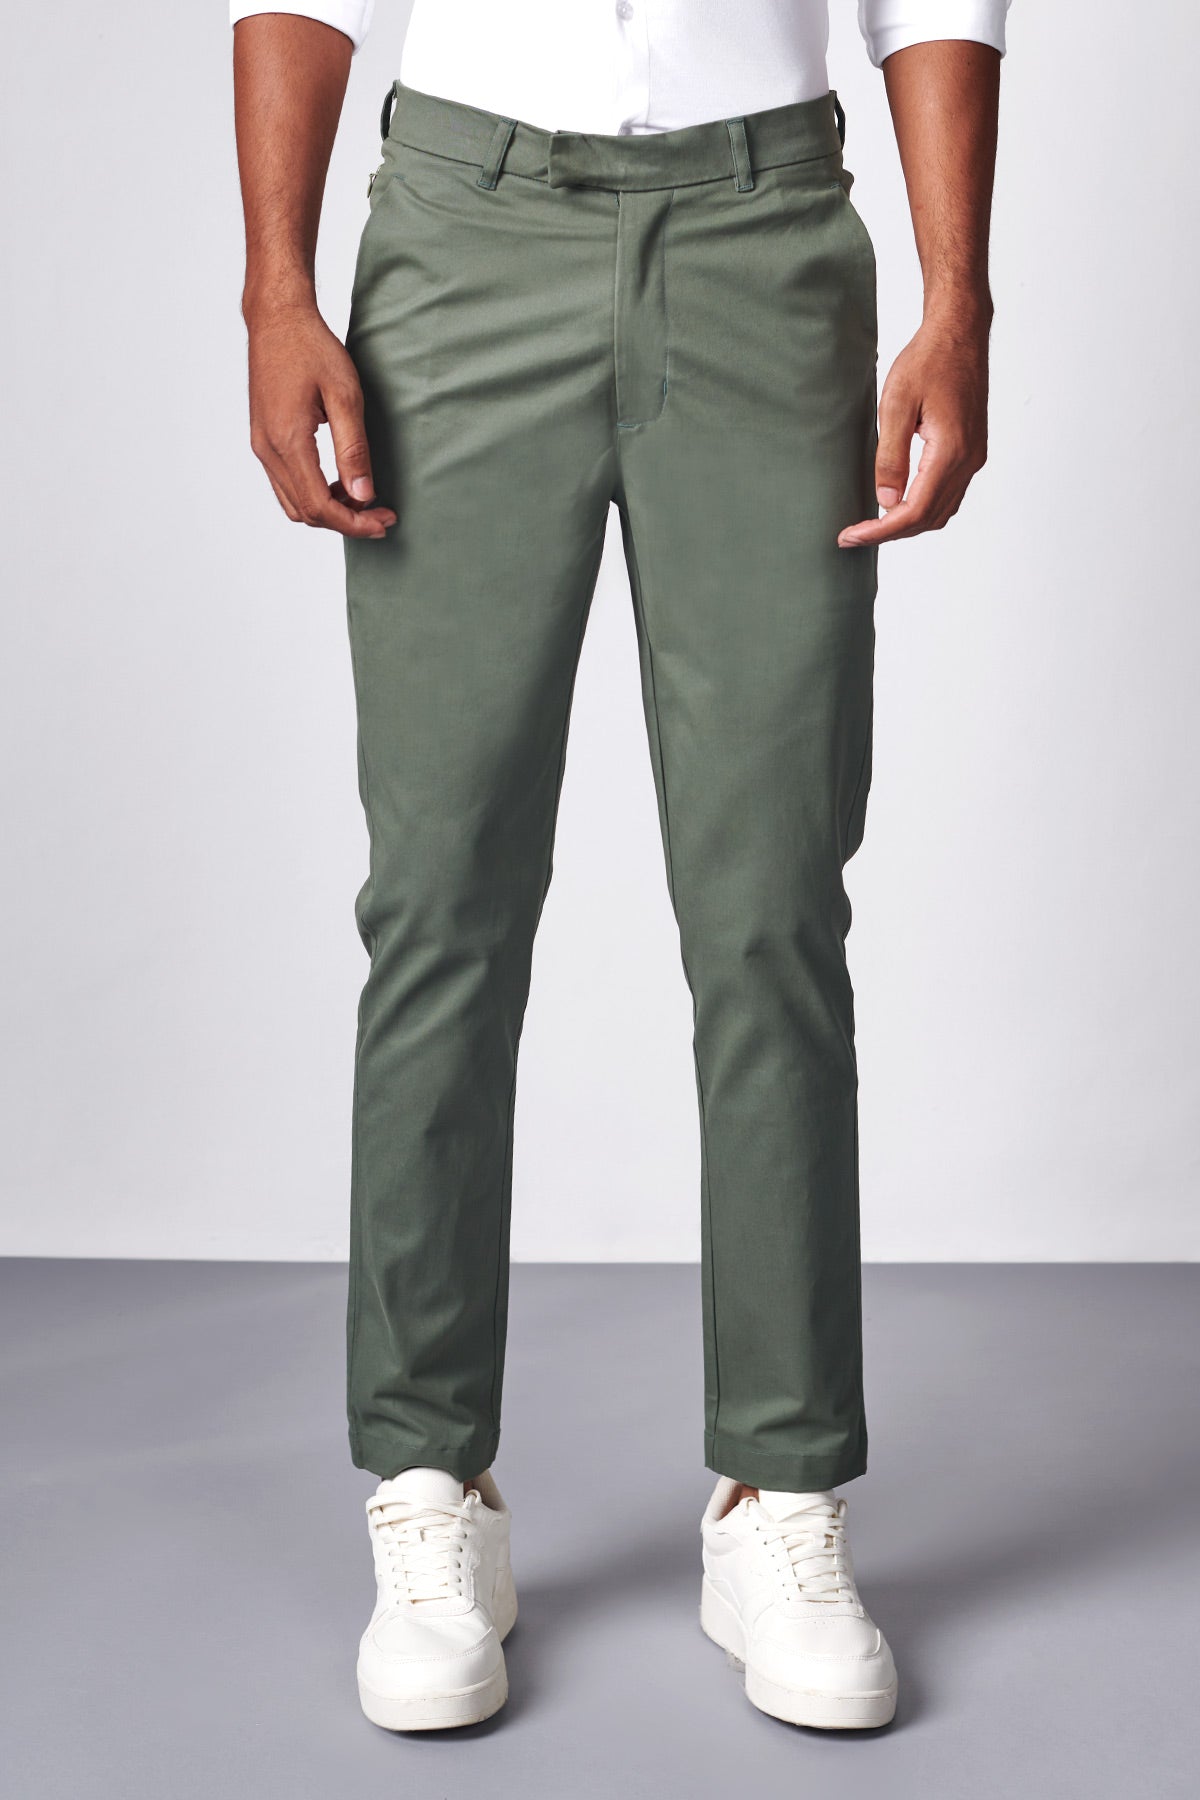 Buy The 24 Fern Green Trouser